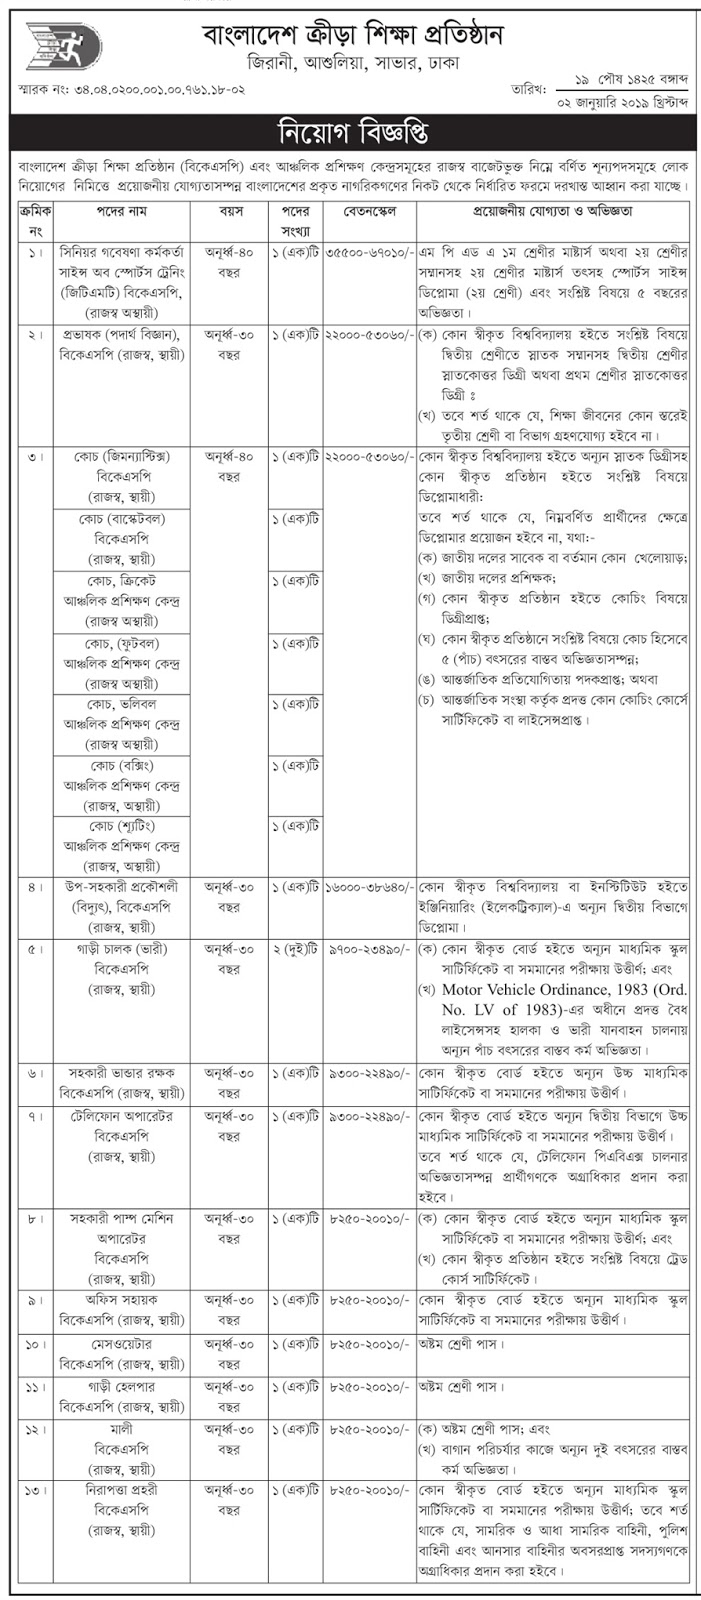 Bangladesh Krira Shikkha Protishtan (BKSP) Job Circular 2019